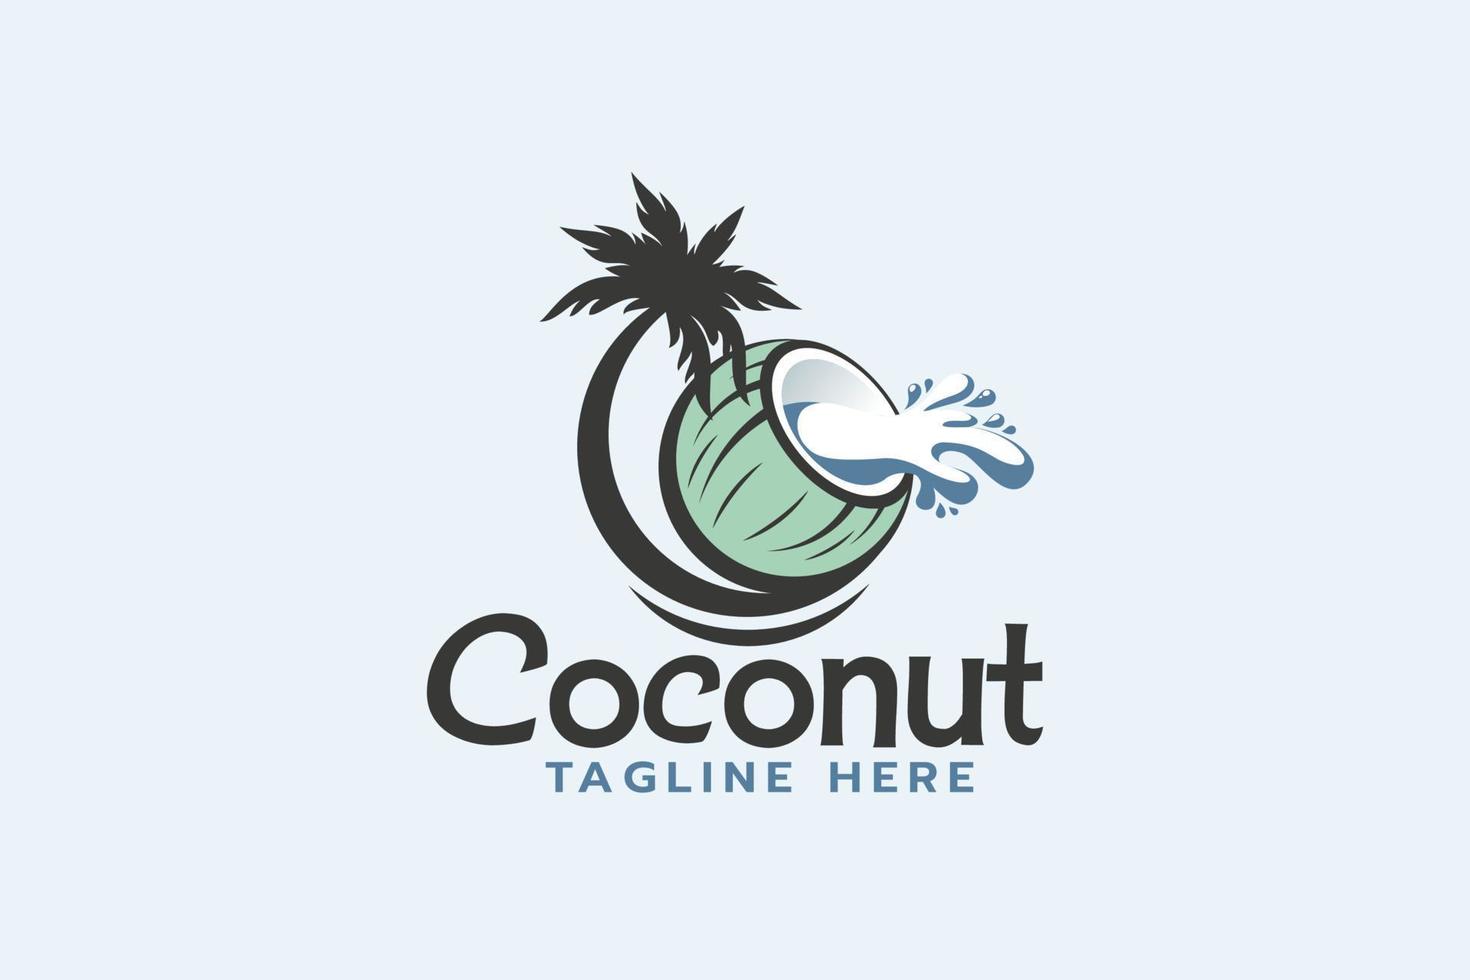 kokosnootlogo met kokospalm en gemorst kokoswater. vector